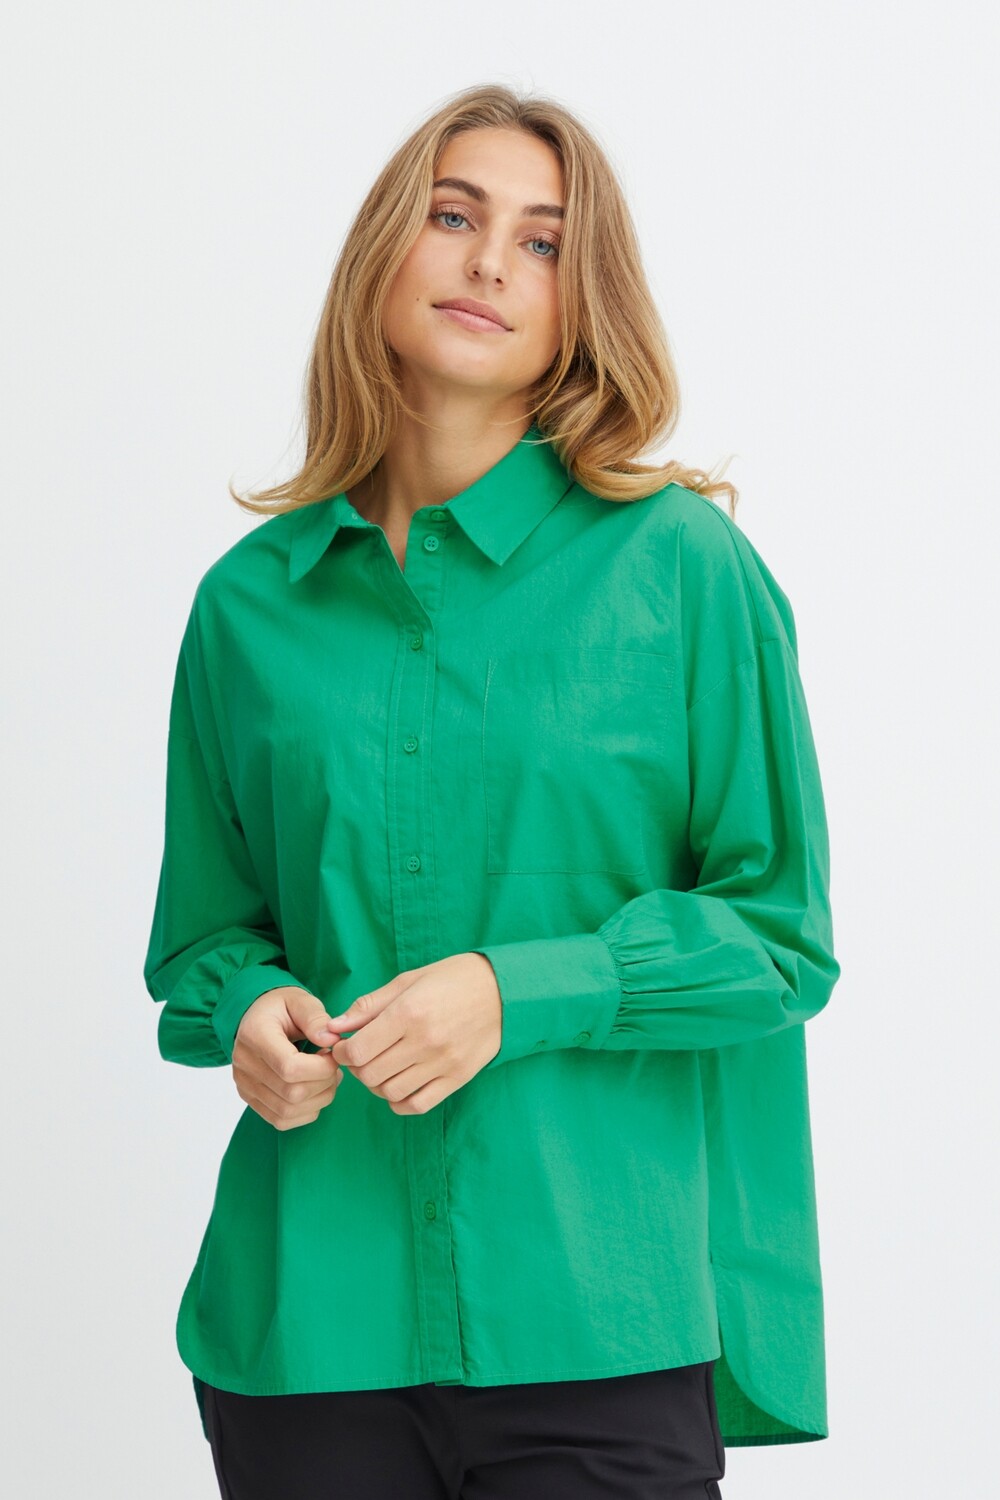 Fransa blouse, holly green